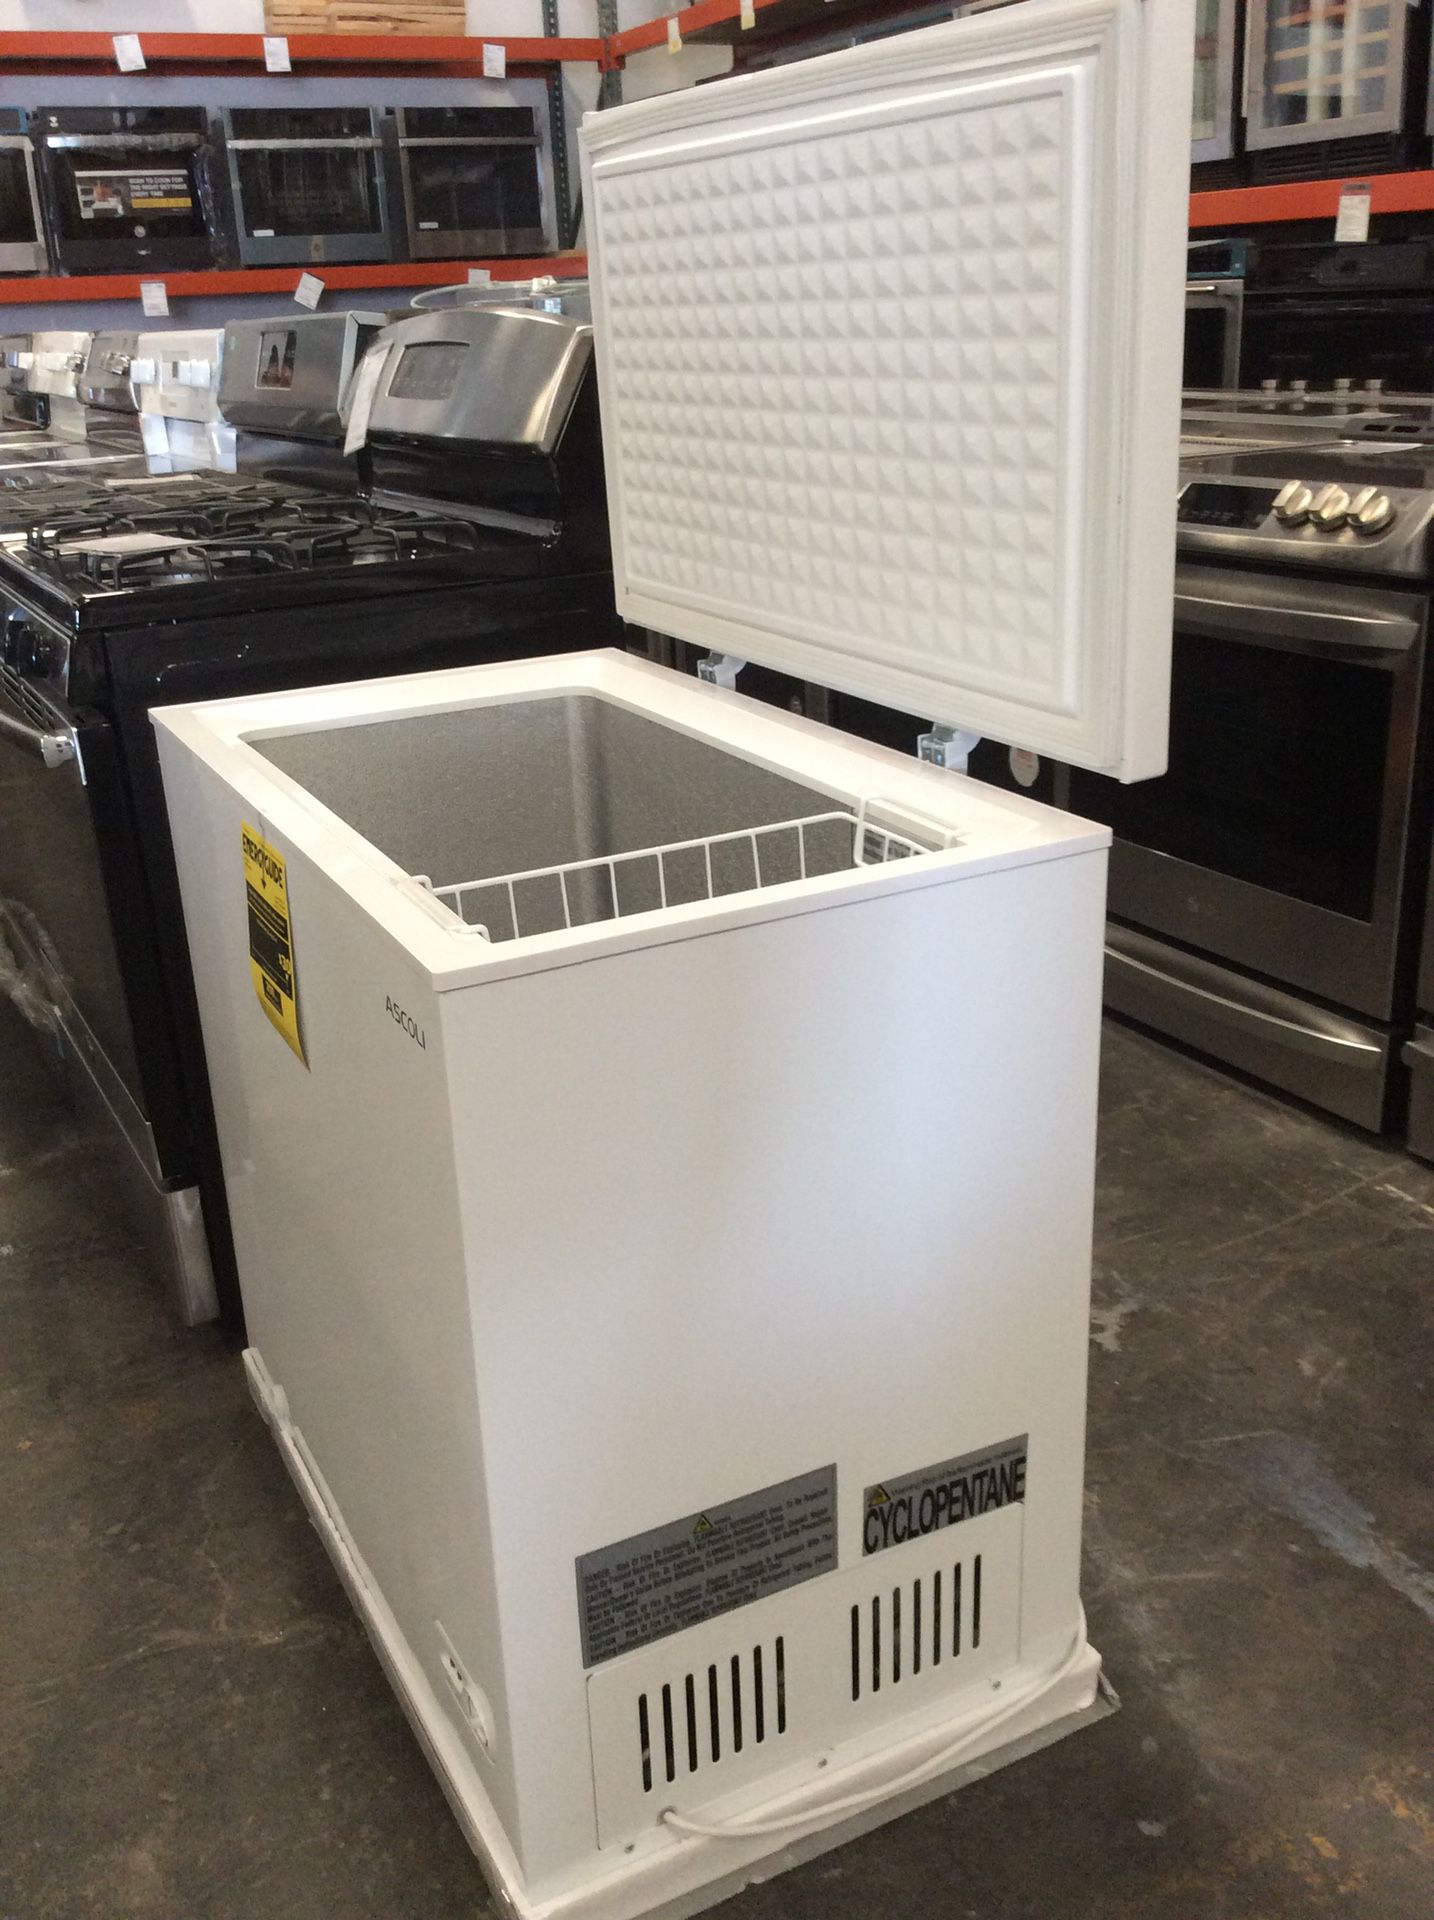 NEW Ascoli 7 cu ft chest freezer